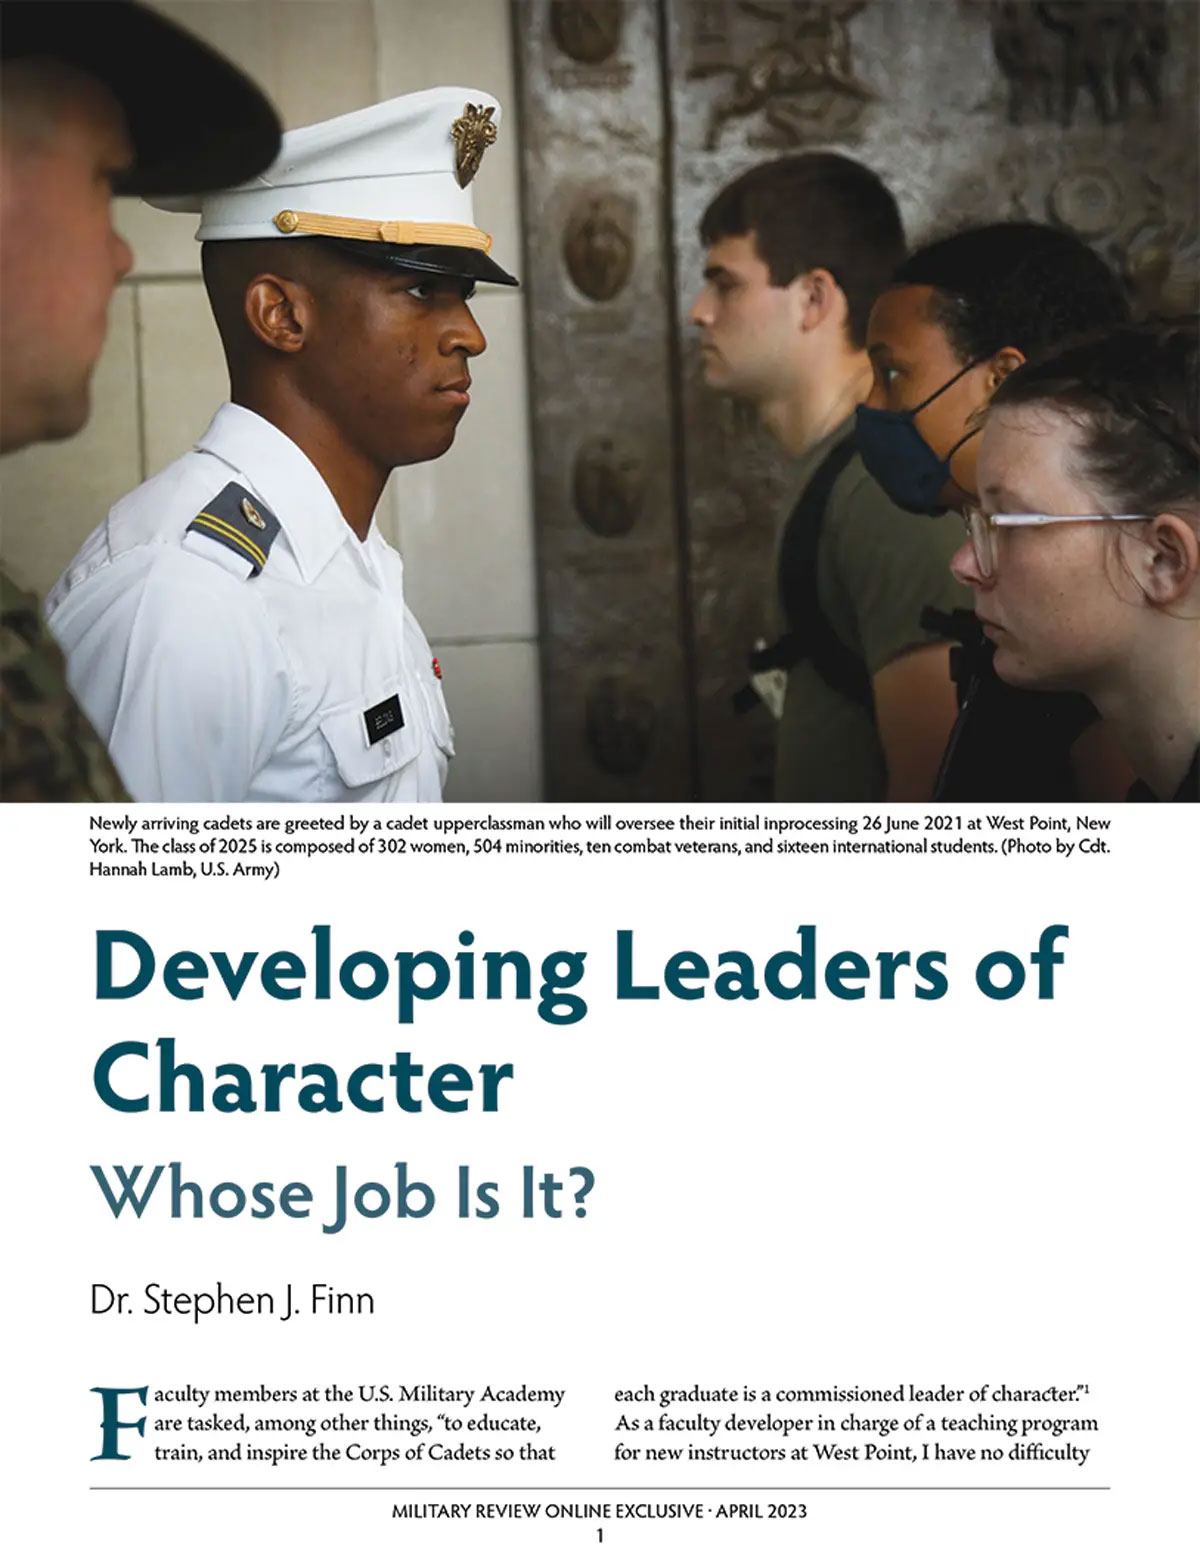 Dr. Stephen J. Finn’s Developing Leaders of Character